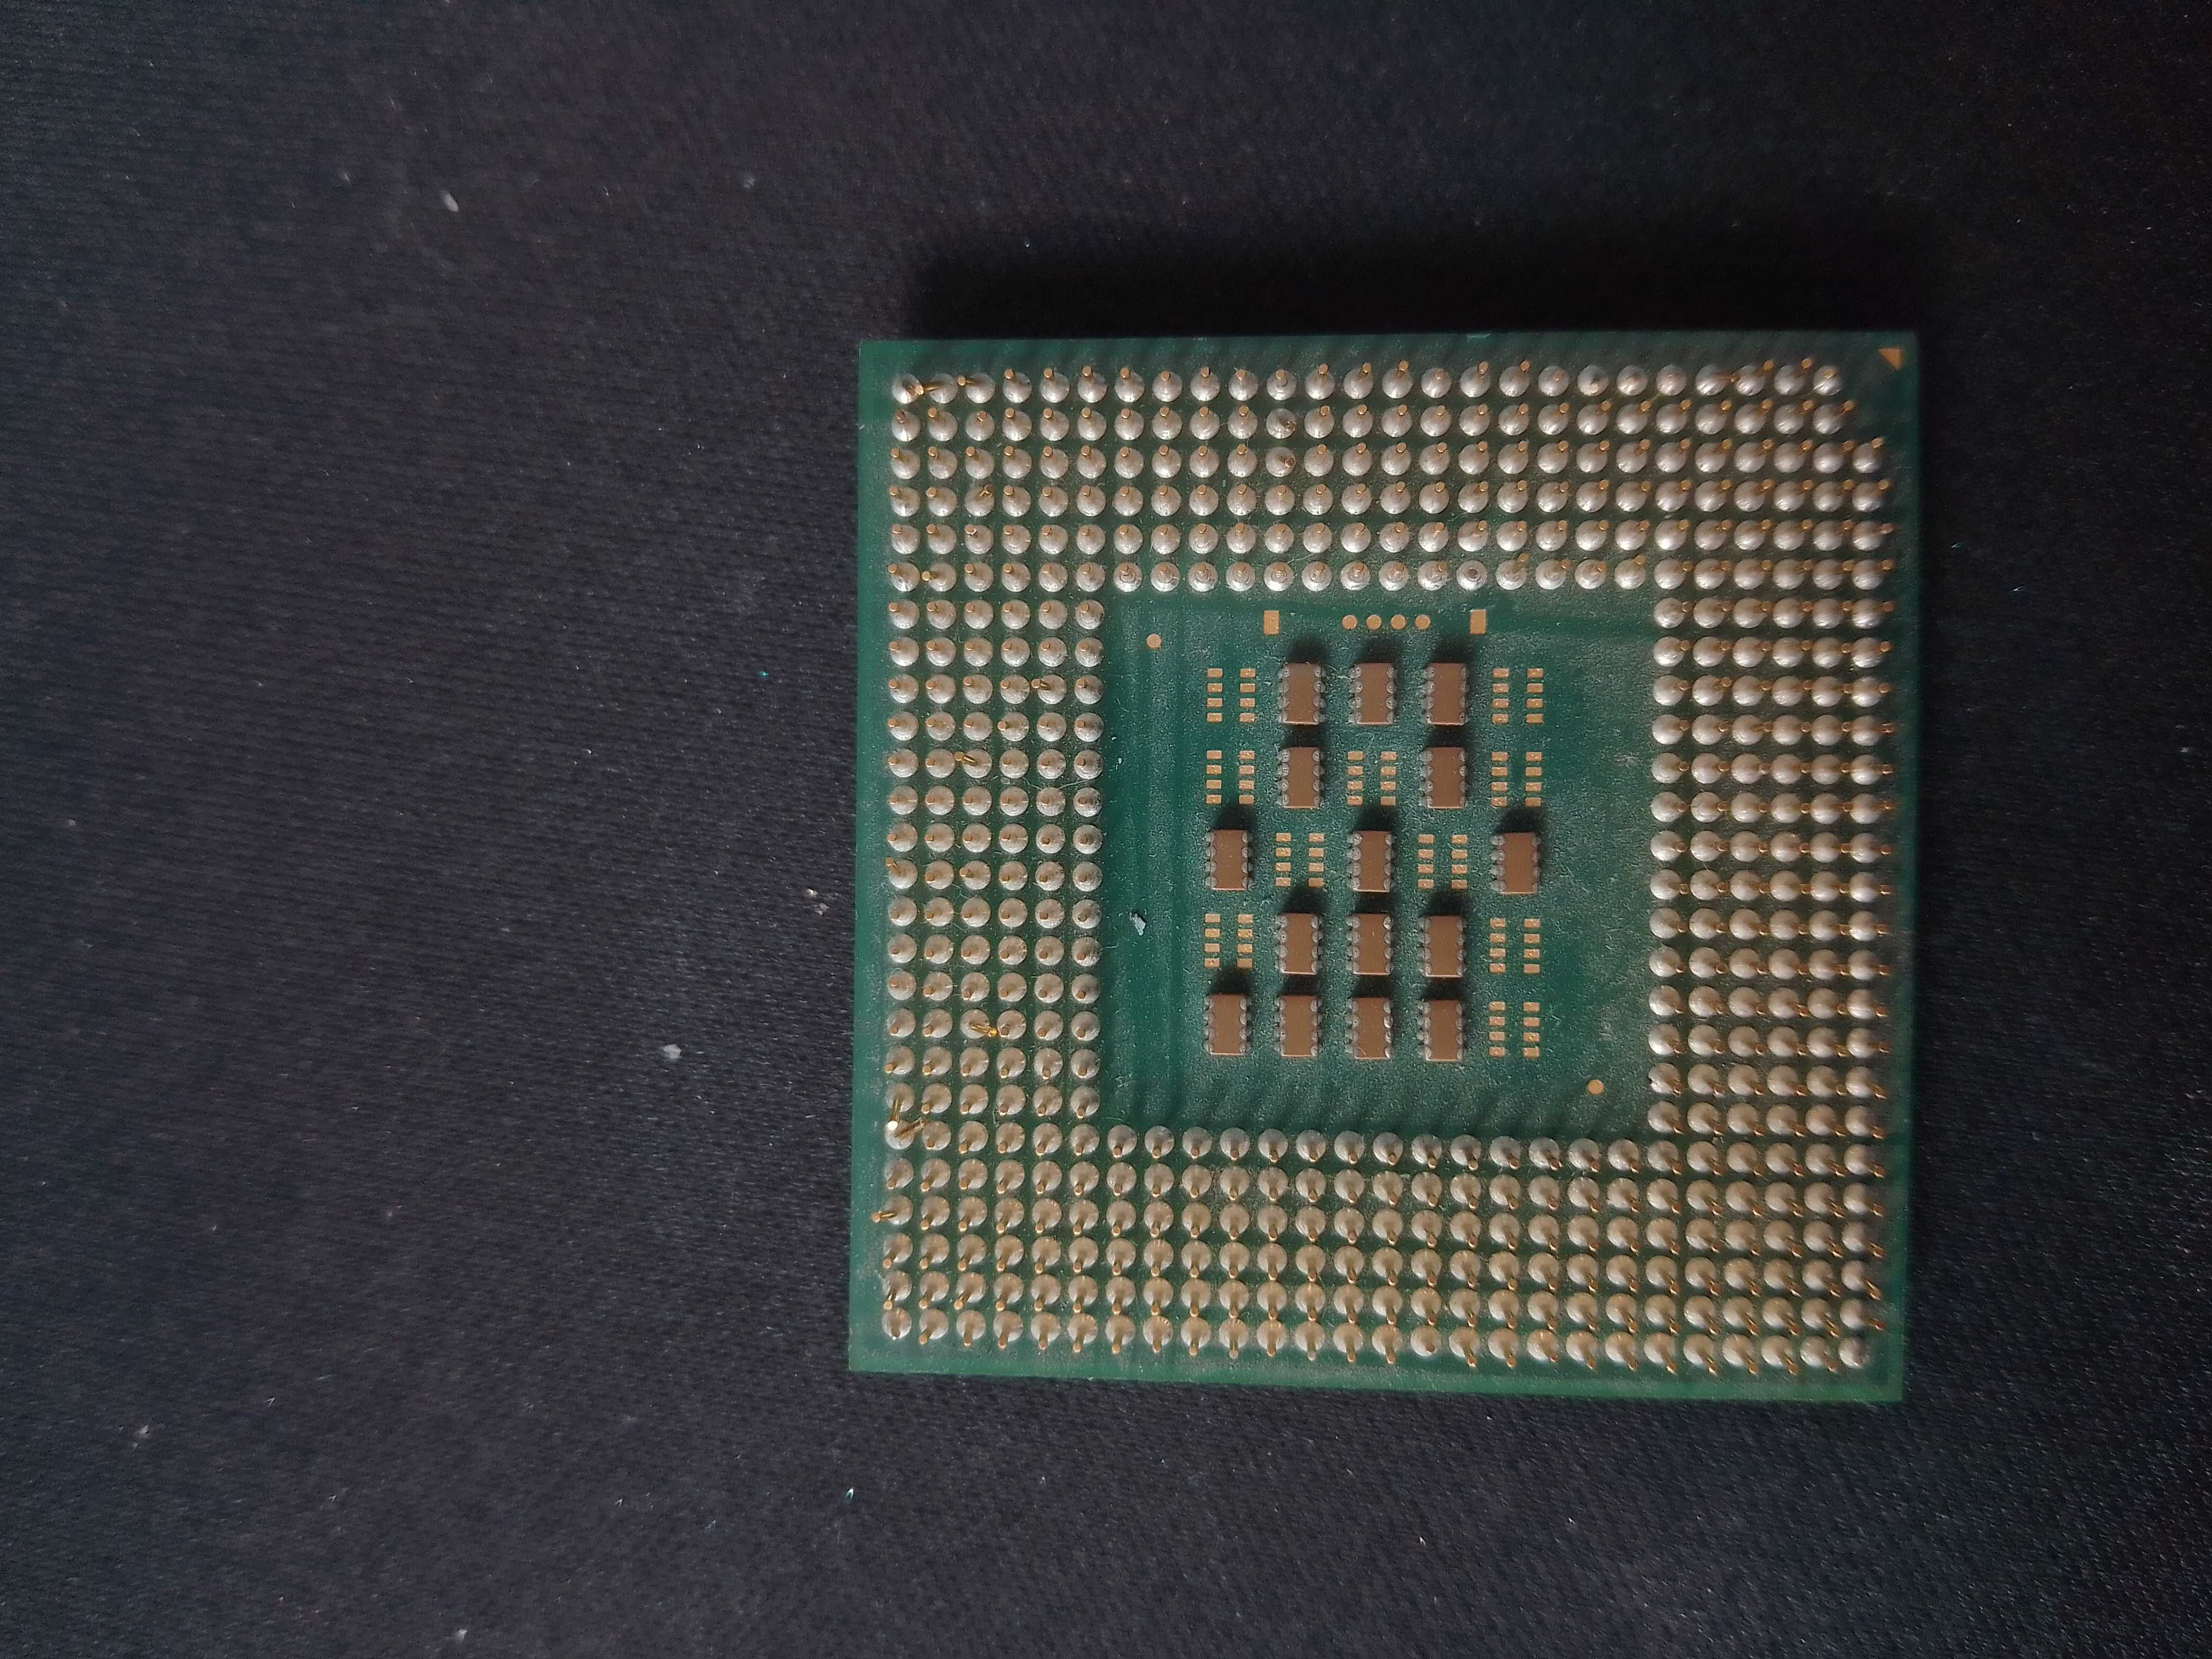 Procesor Intel Pentium 4 SL5ZT 1r / 2.00 GHz (001156)